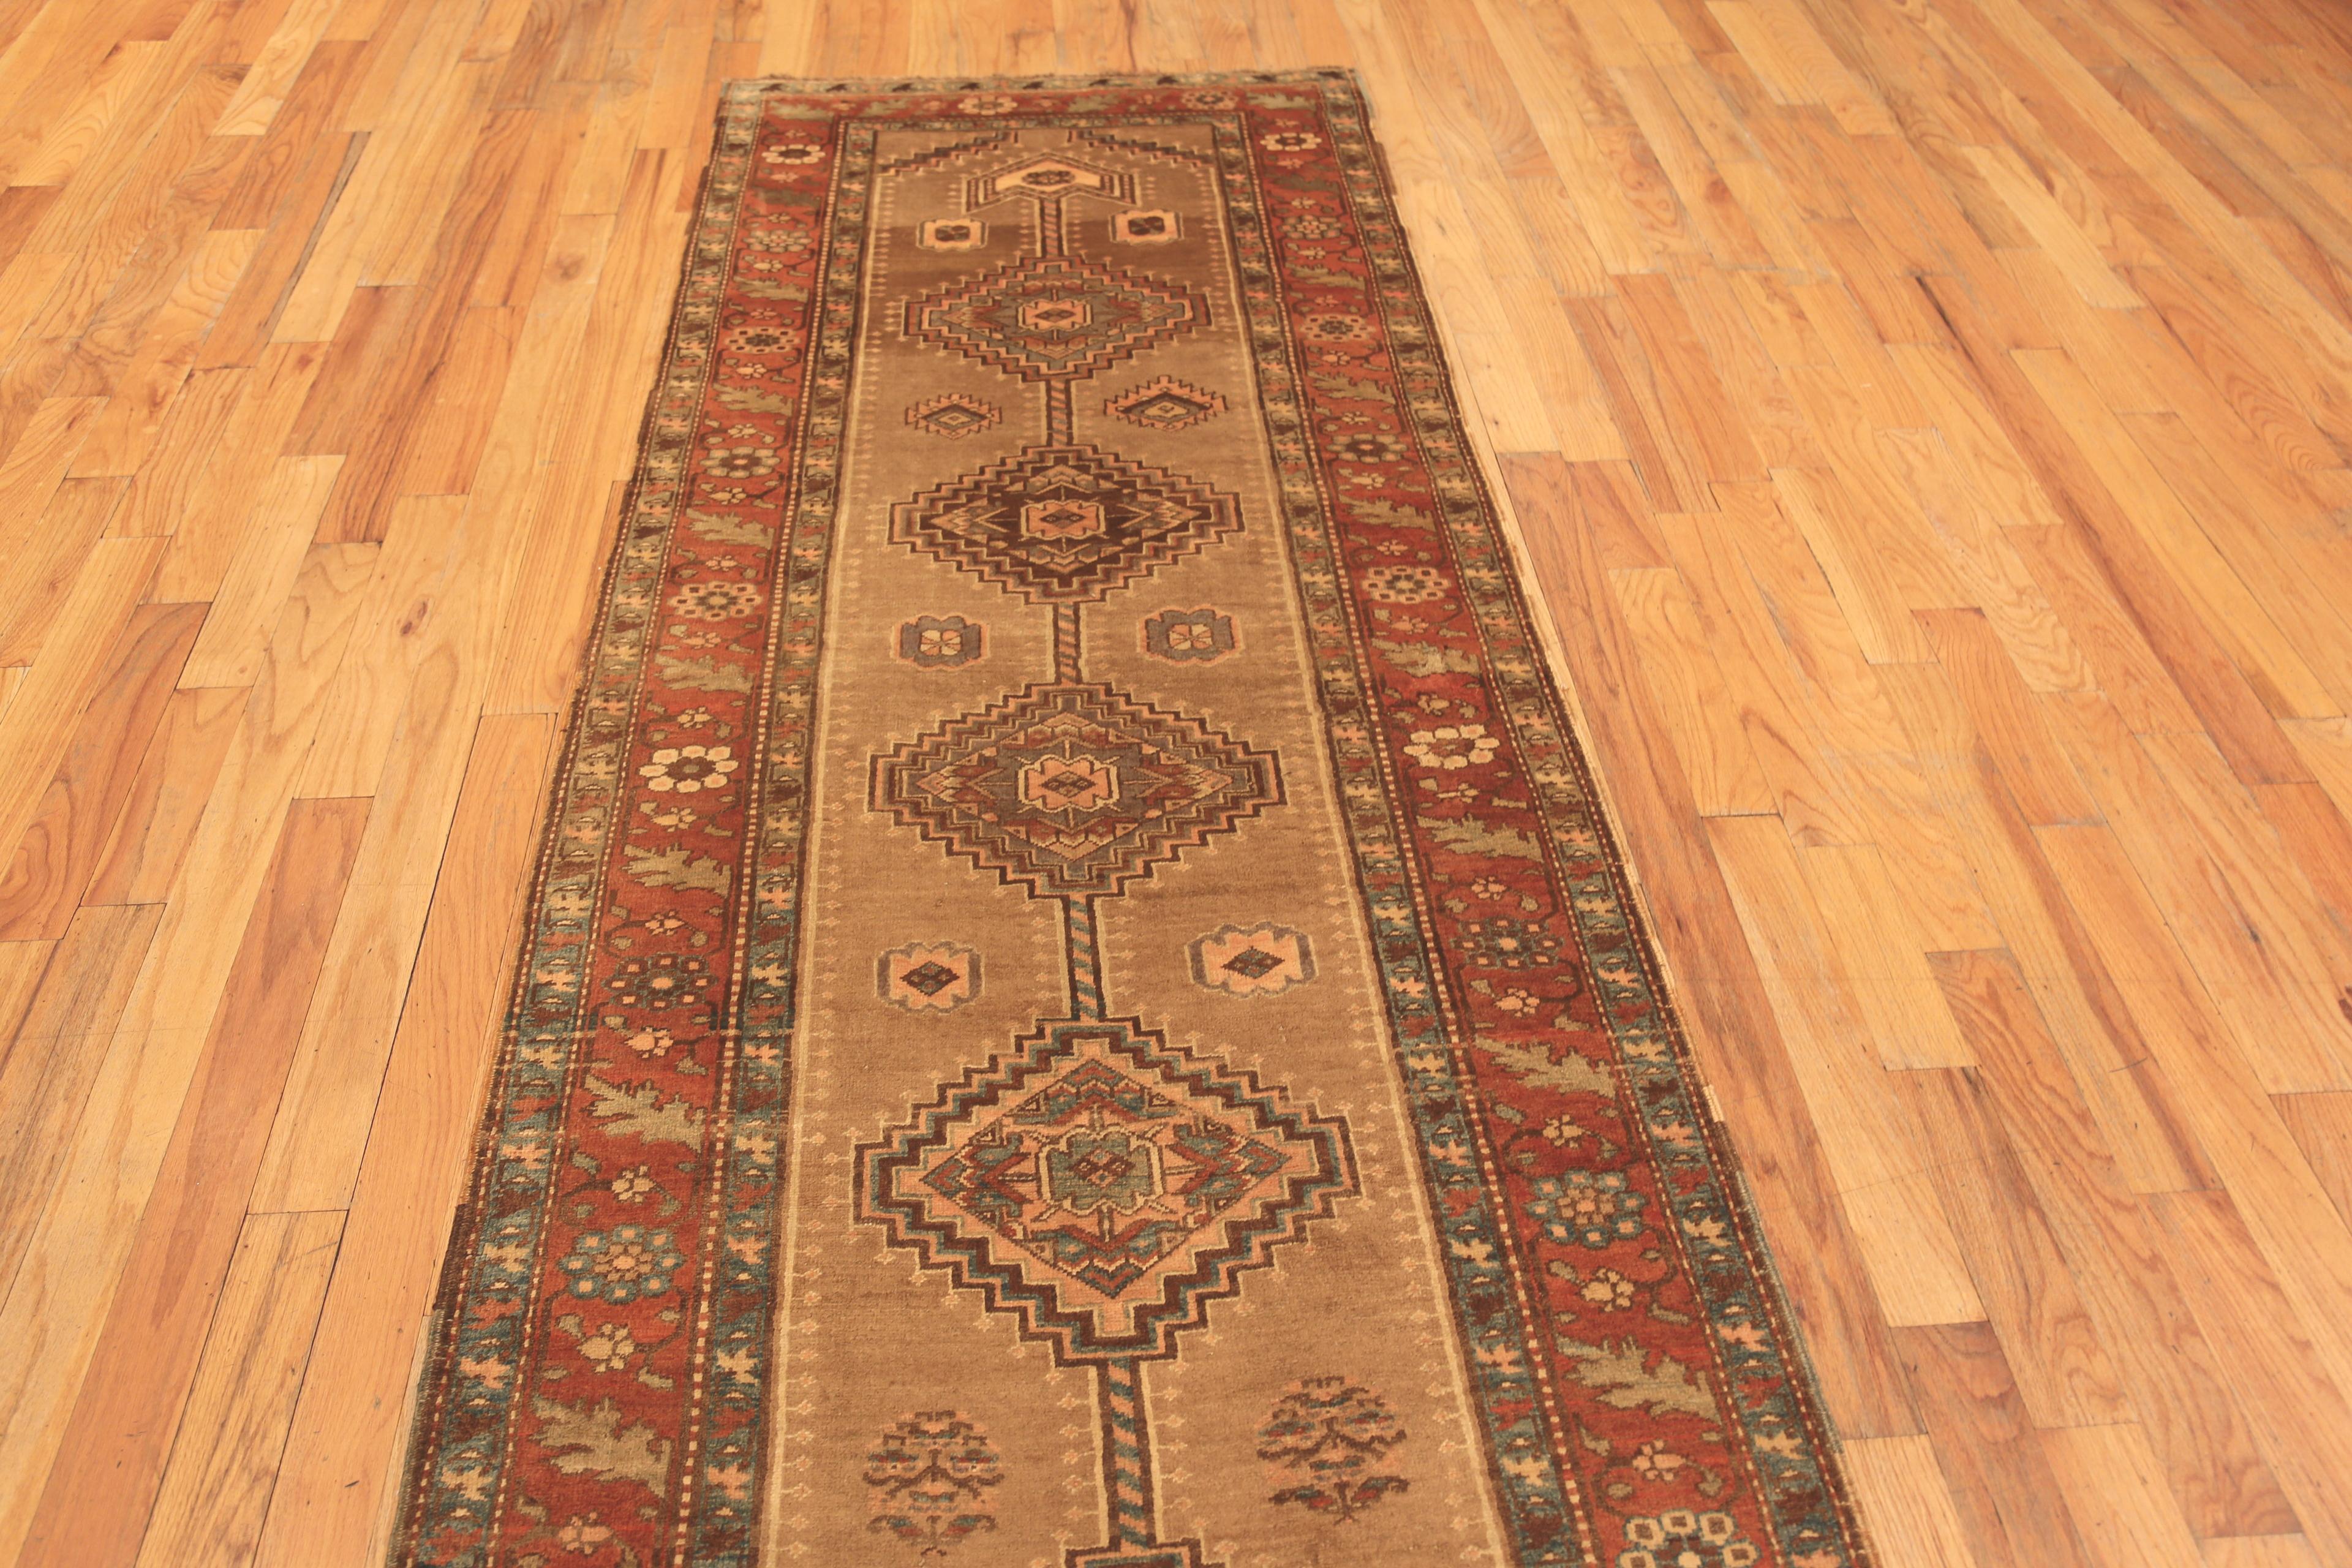 Antique Persian Serab Runner Rug, Country of Origin: Persian rug, Circa date: 1920. Size: 3 ft 6 in x 13 ft 8 in (1.07 m x 4.17 m)

